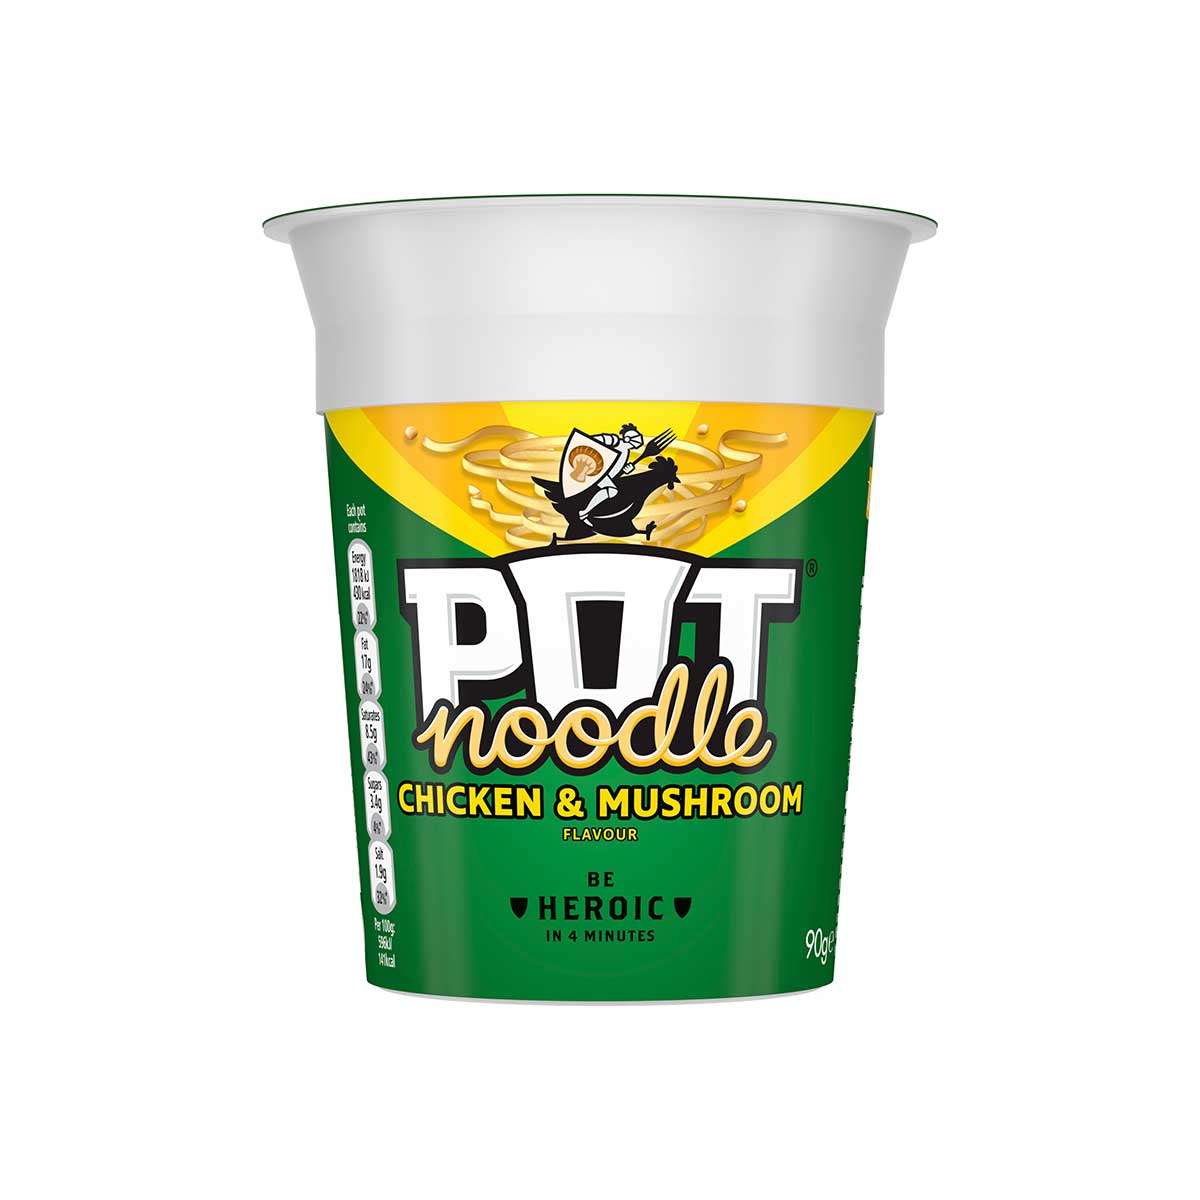 Pot noodle puzzle online from photo